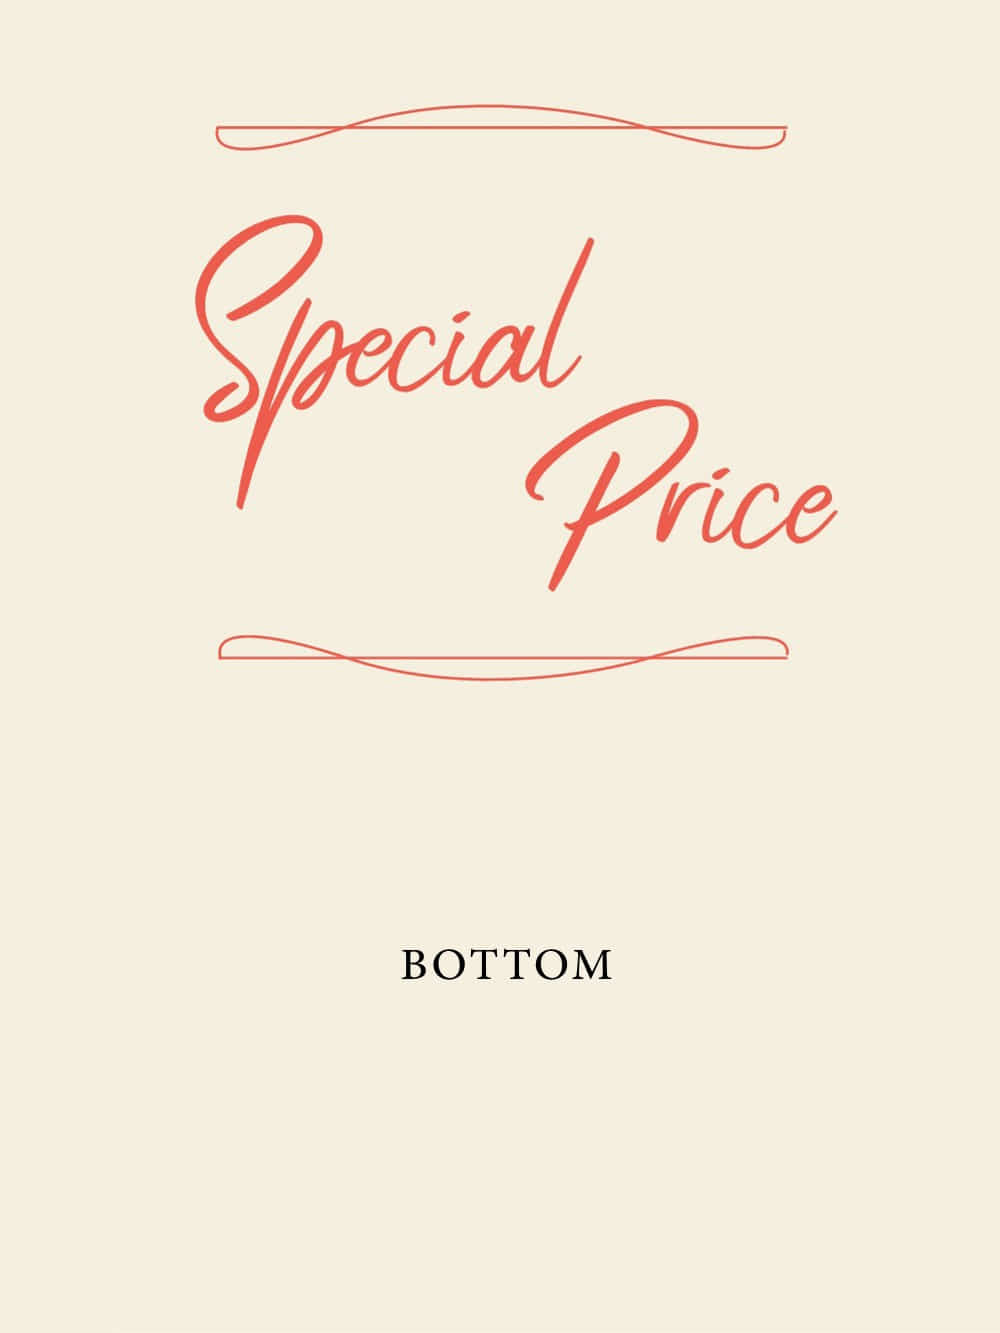 Special price - Bottom -